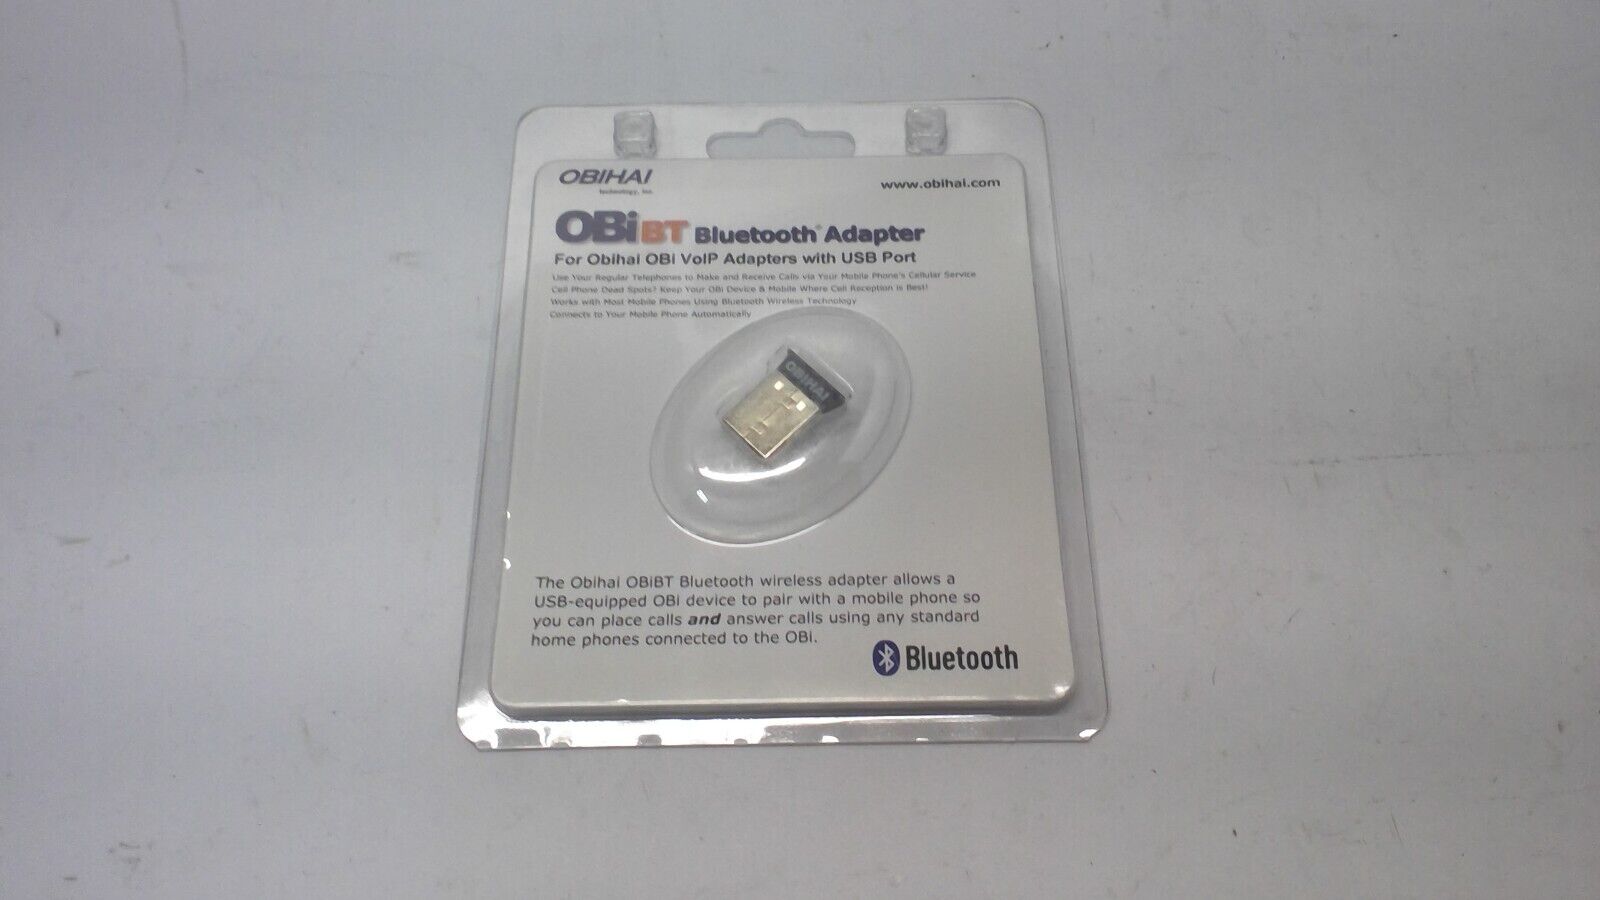 ObiBT Bluetooth Adapter for Obihai Obi VoIP Adapters with USB Port, 200/202 etc.